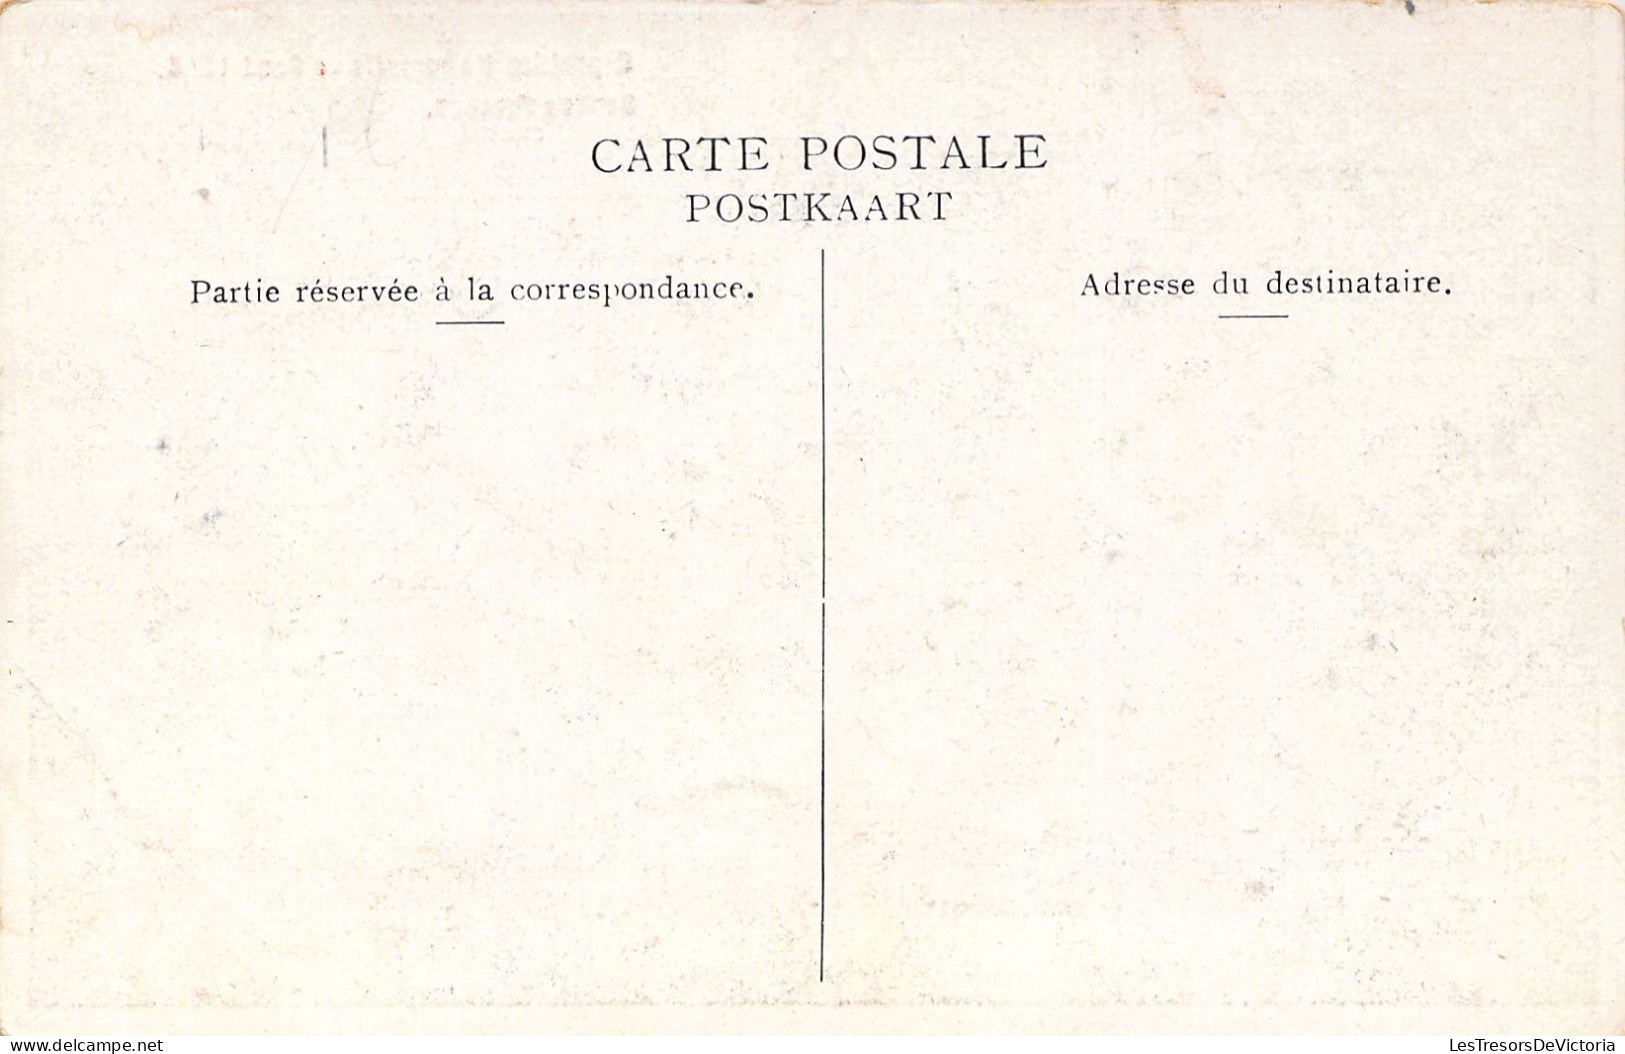 BELGIQUE - GAND - GENT - Exposition Universelle 1913 - Section Persane  - Carte Postale Ancienne - Gent